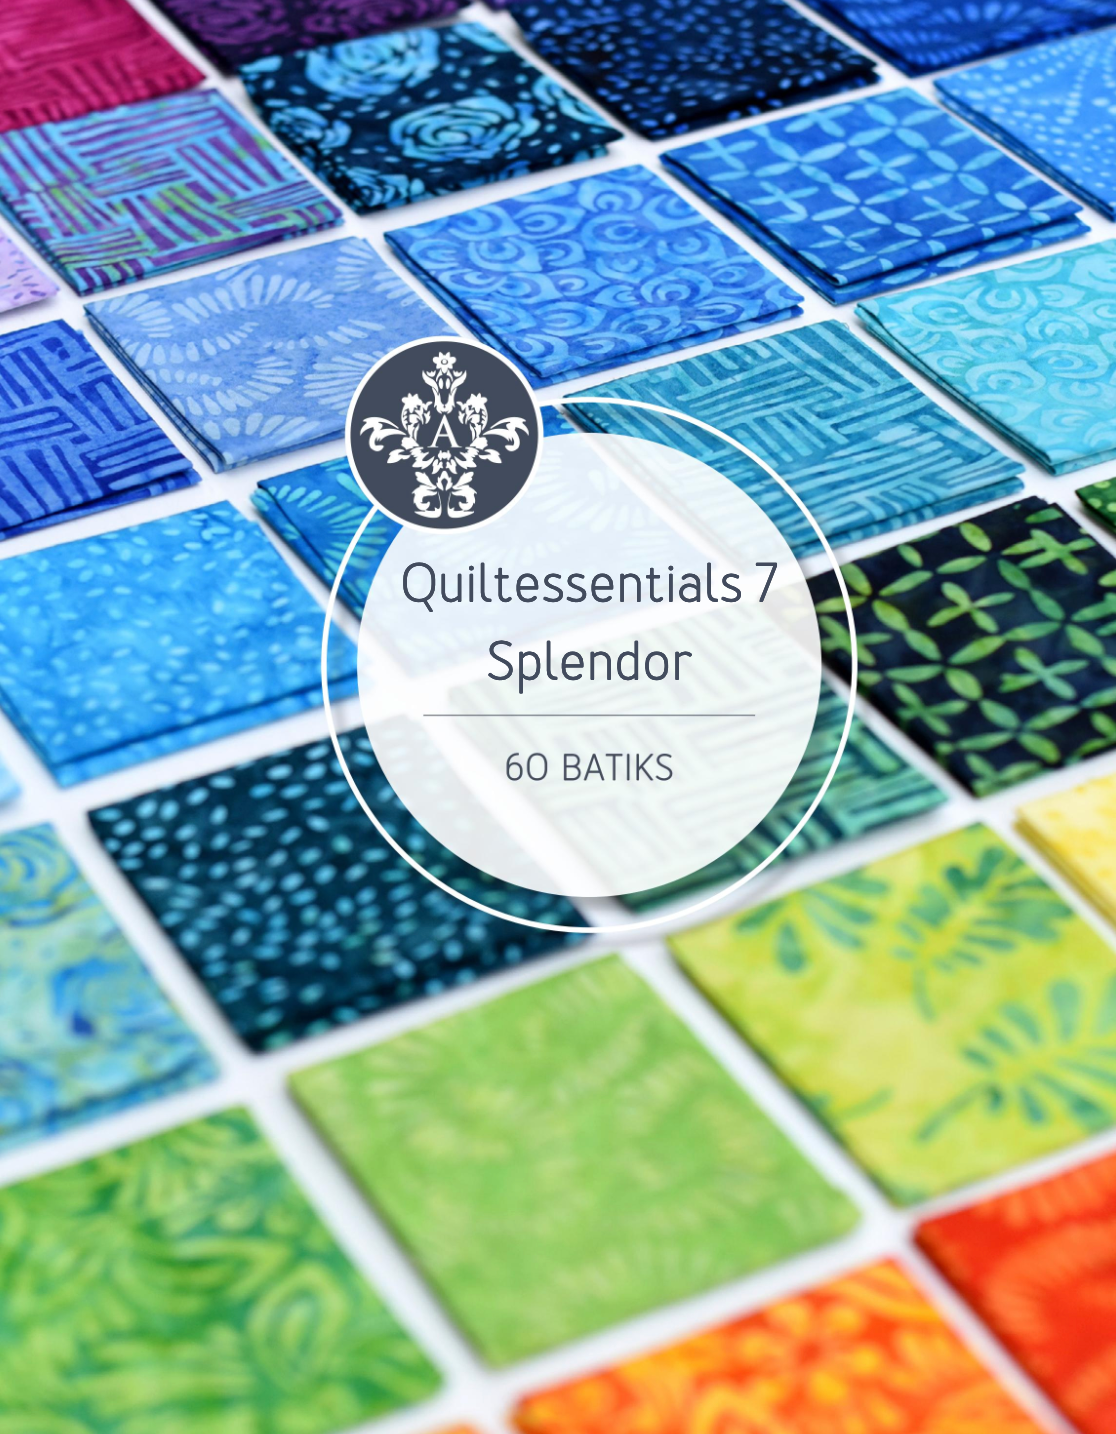 Splendor Quiltessentials 7 Batiks by Anthology Fabrics